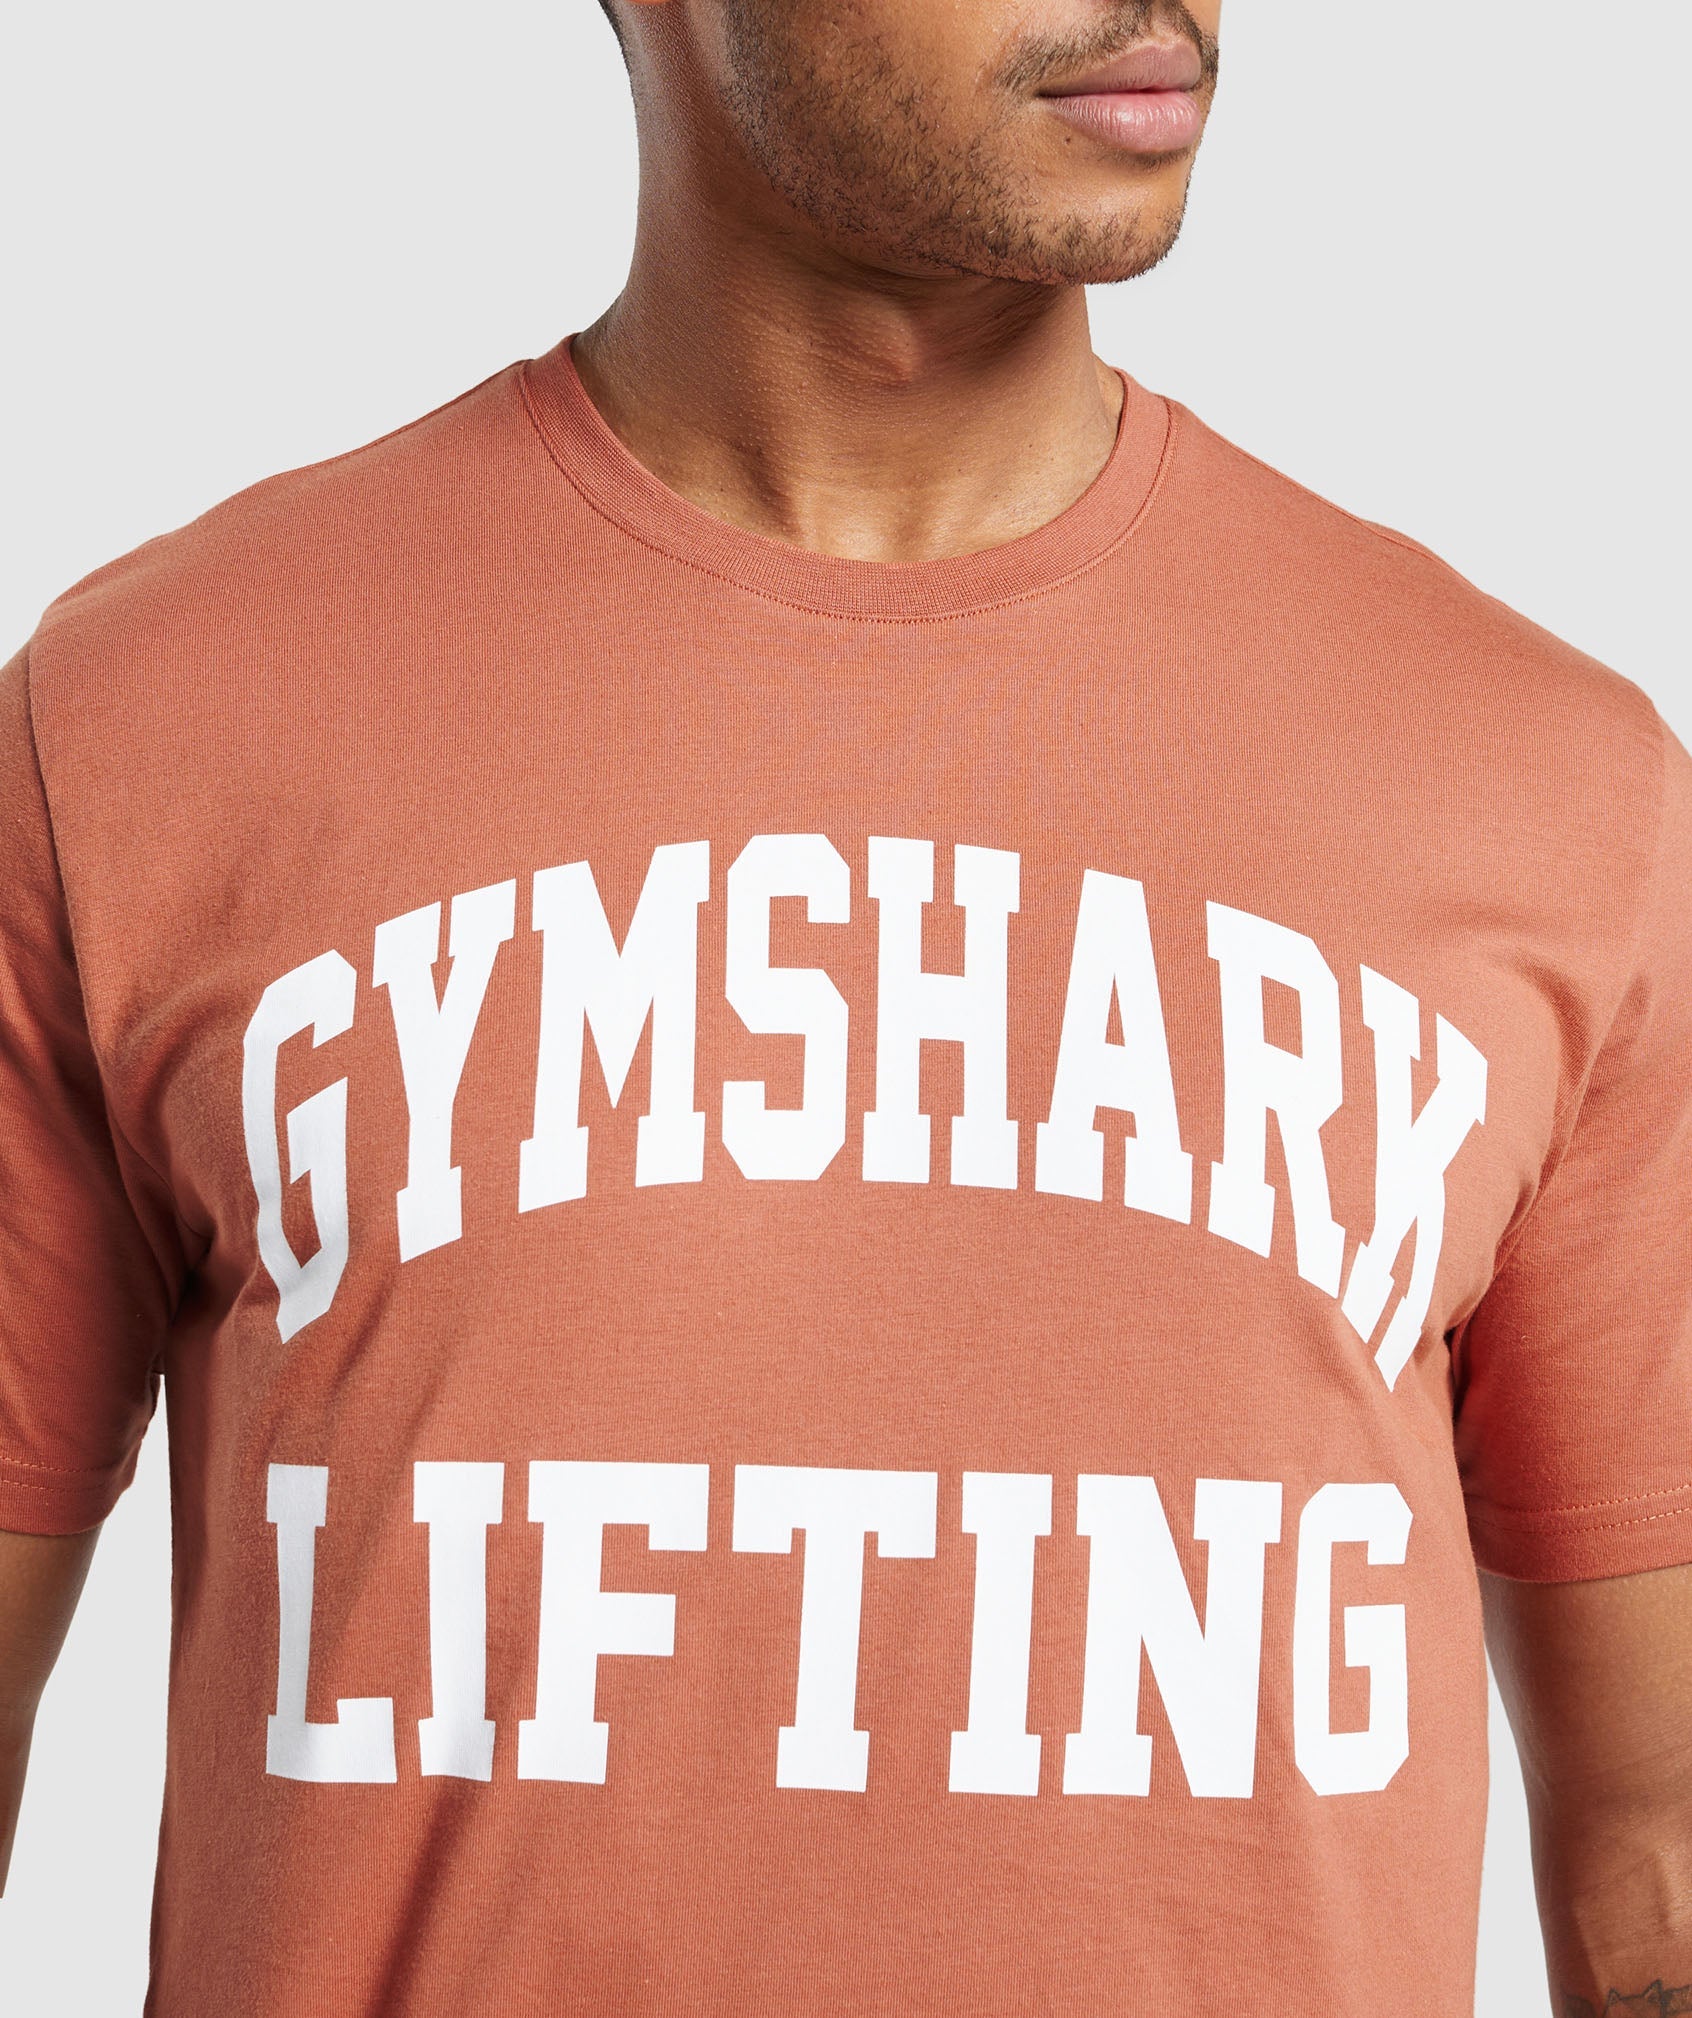 Lifting Club T-Shirt in Terracotta Orange - view 5